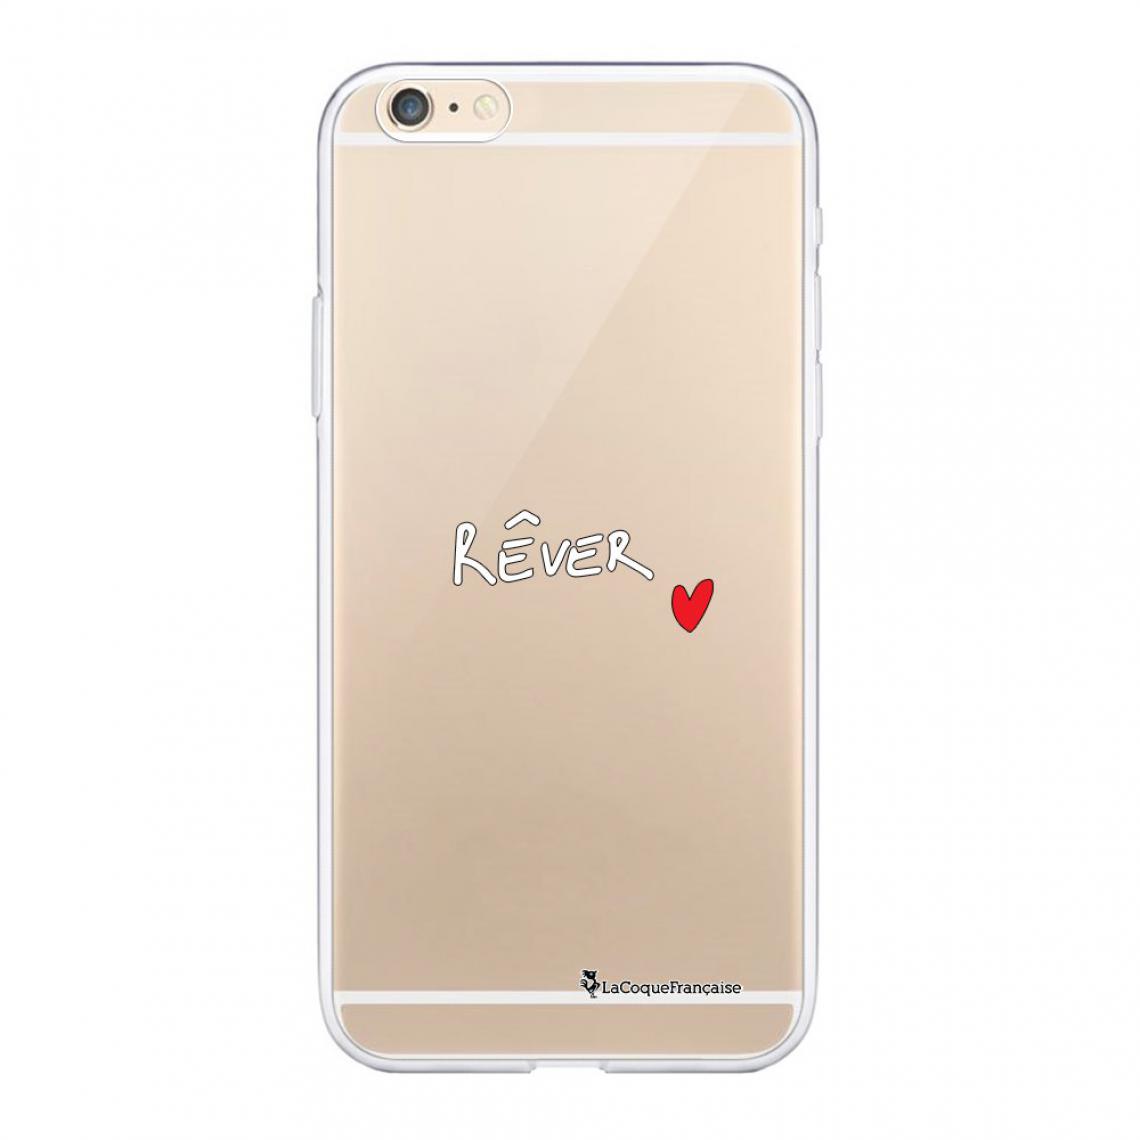 La Coque Francaise - Coque iPhone 6/6S souple silicone transparente - Coque, étui smartphone